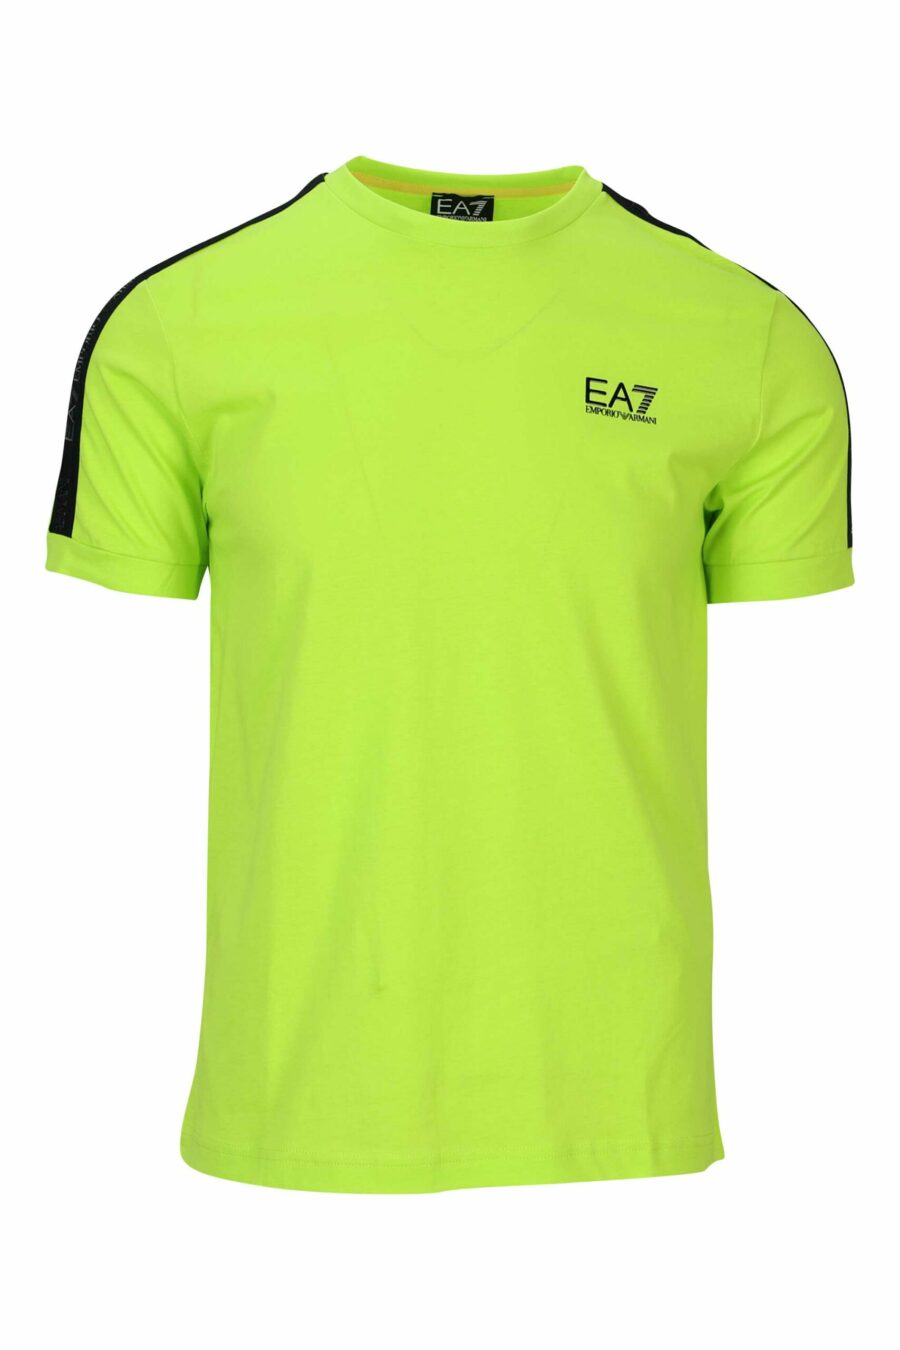 Lindgrünes T-Shirt mit schwarzem "lux identity" Mini-Logo-Band - 8058947490943 skaliert